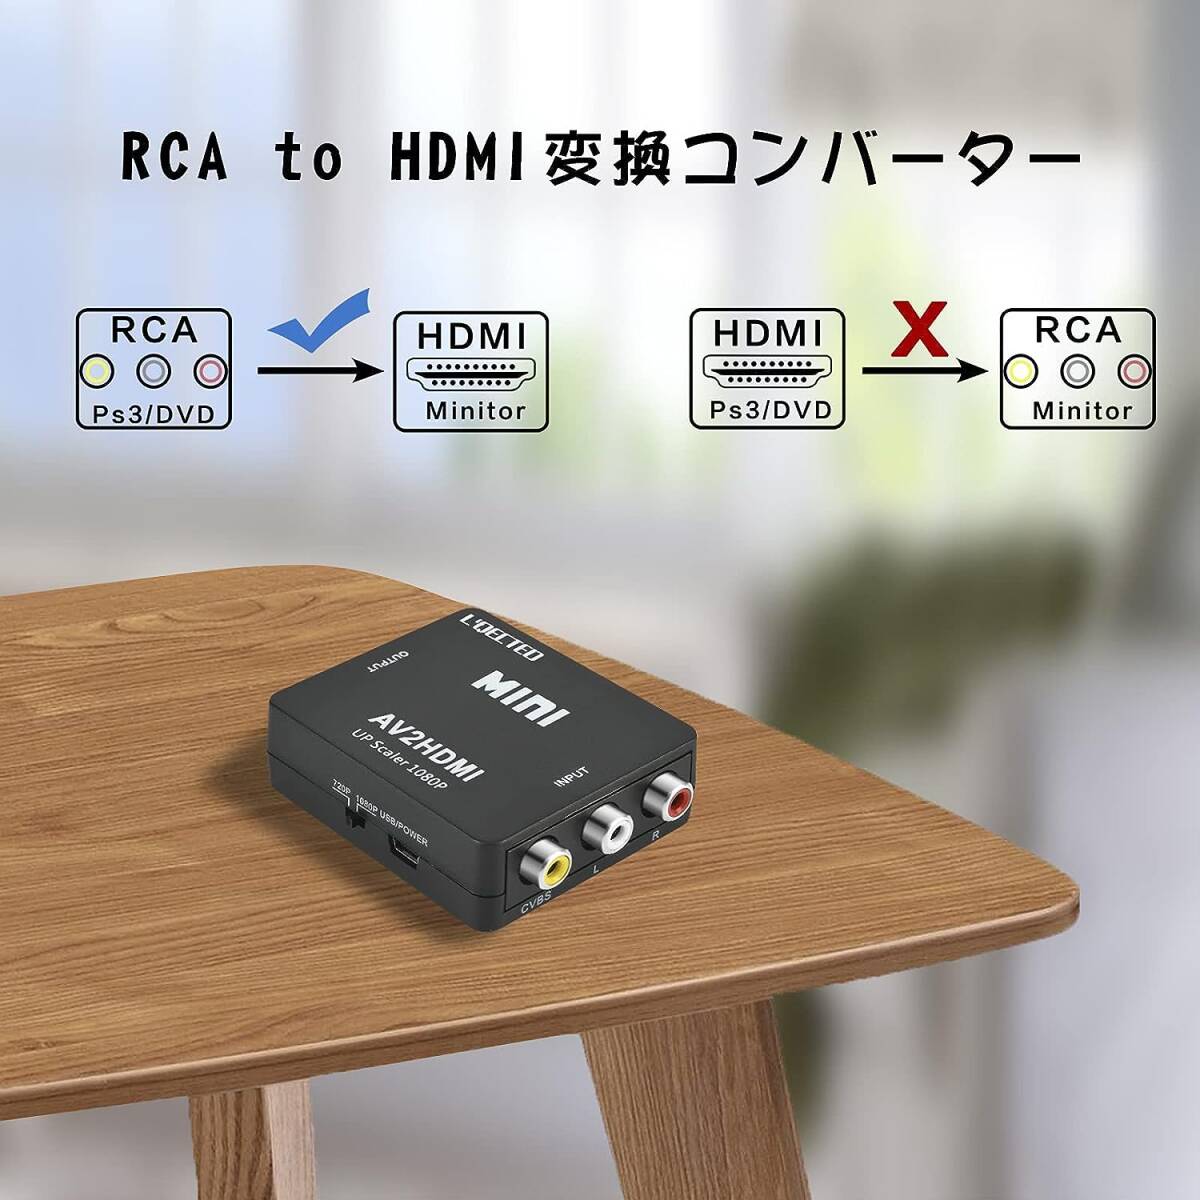 RCA to HDMI変換コンバーター L'QECTED RCA HDMI 変換 AV2HDMI 1080/720P切り替え 音声_画像6